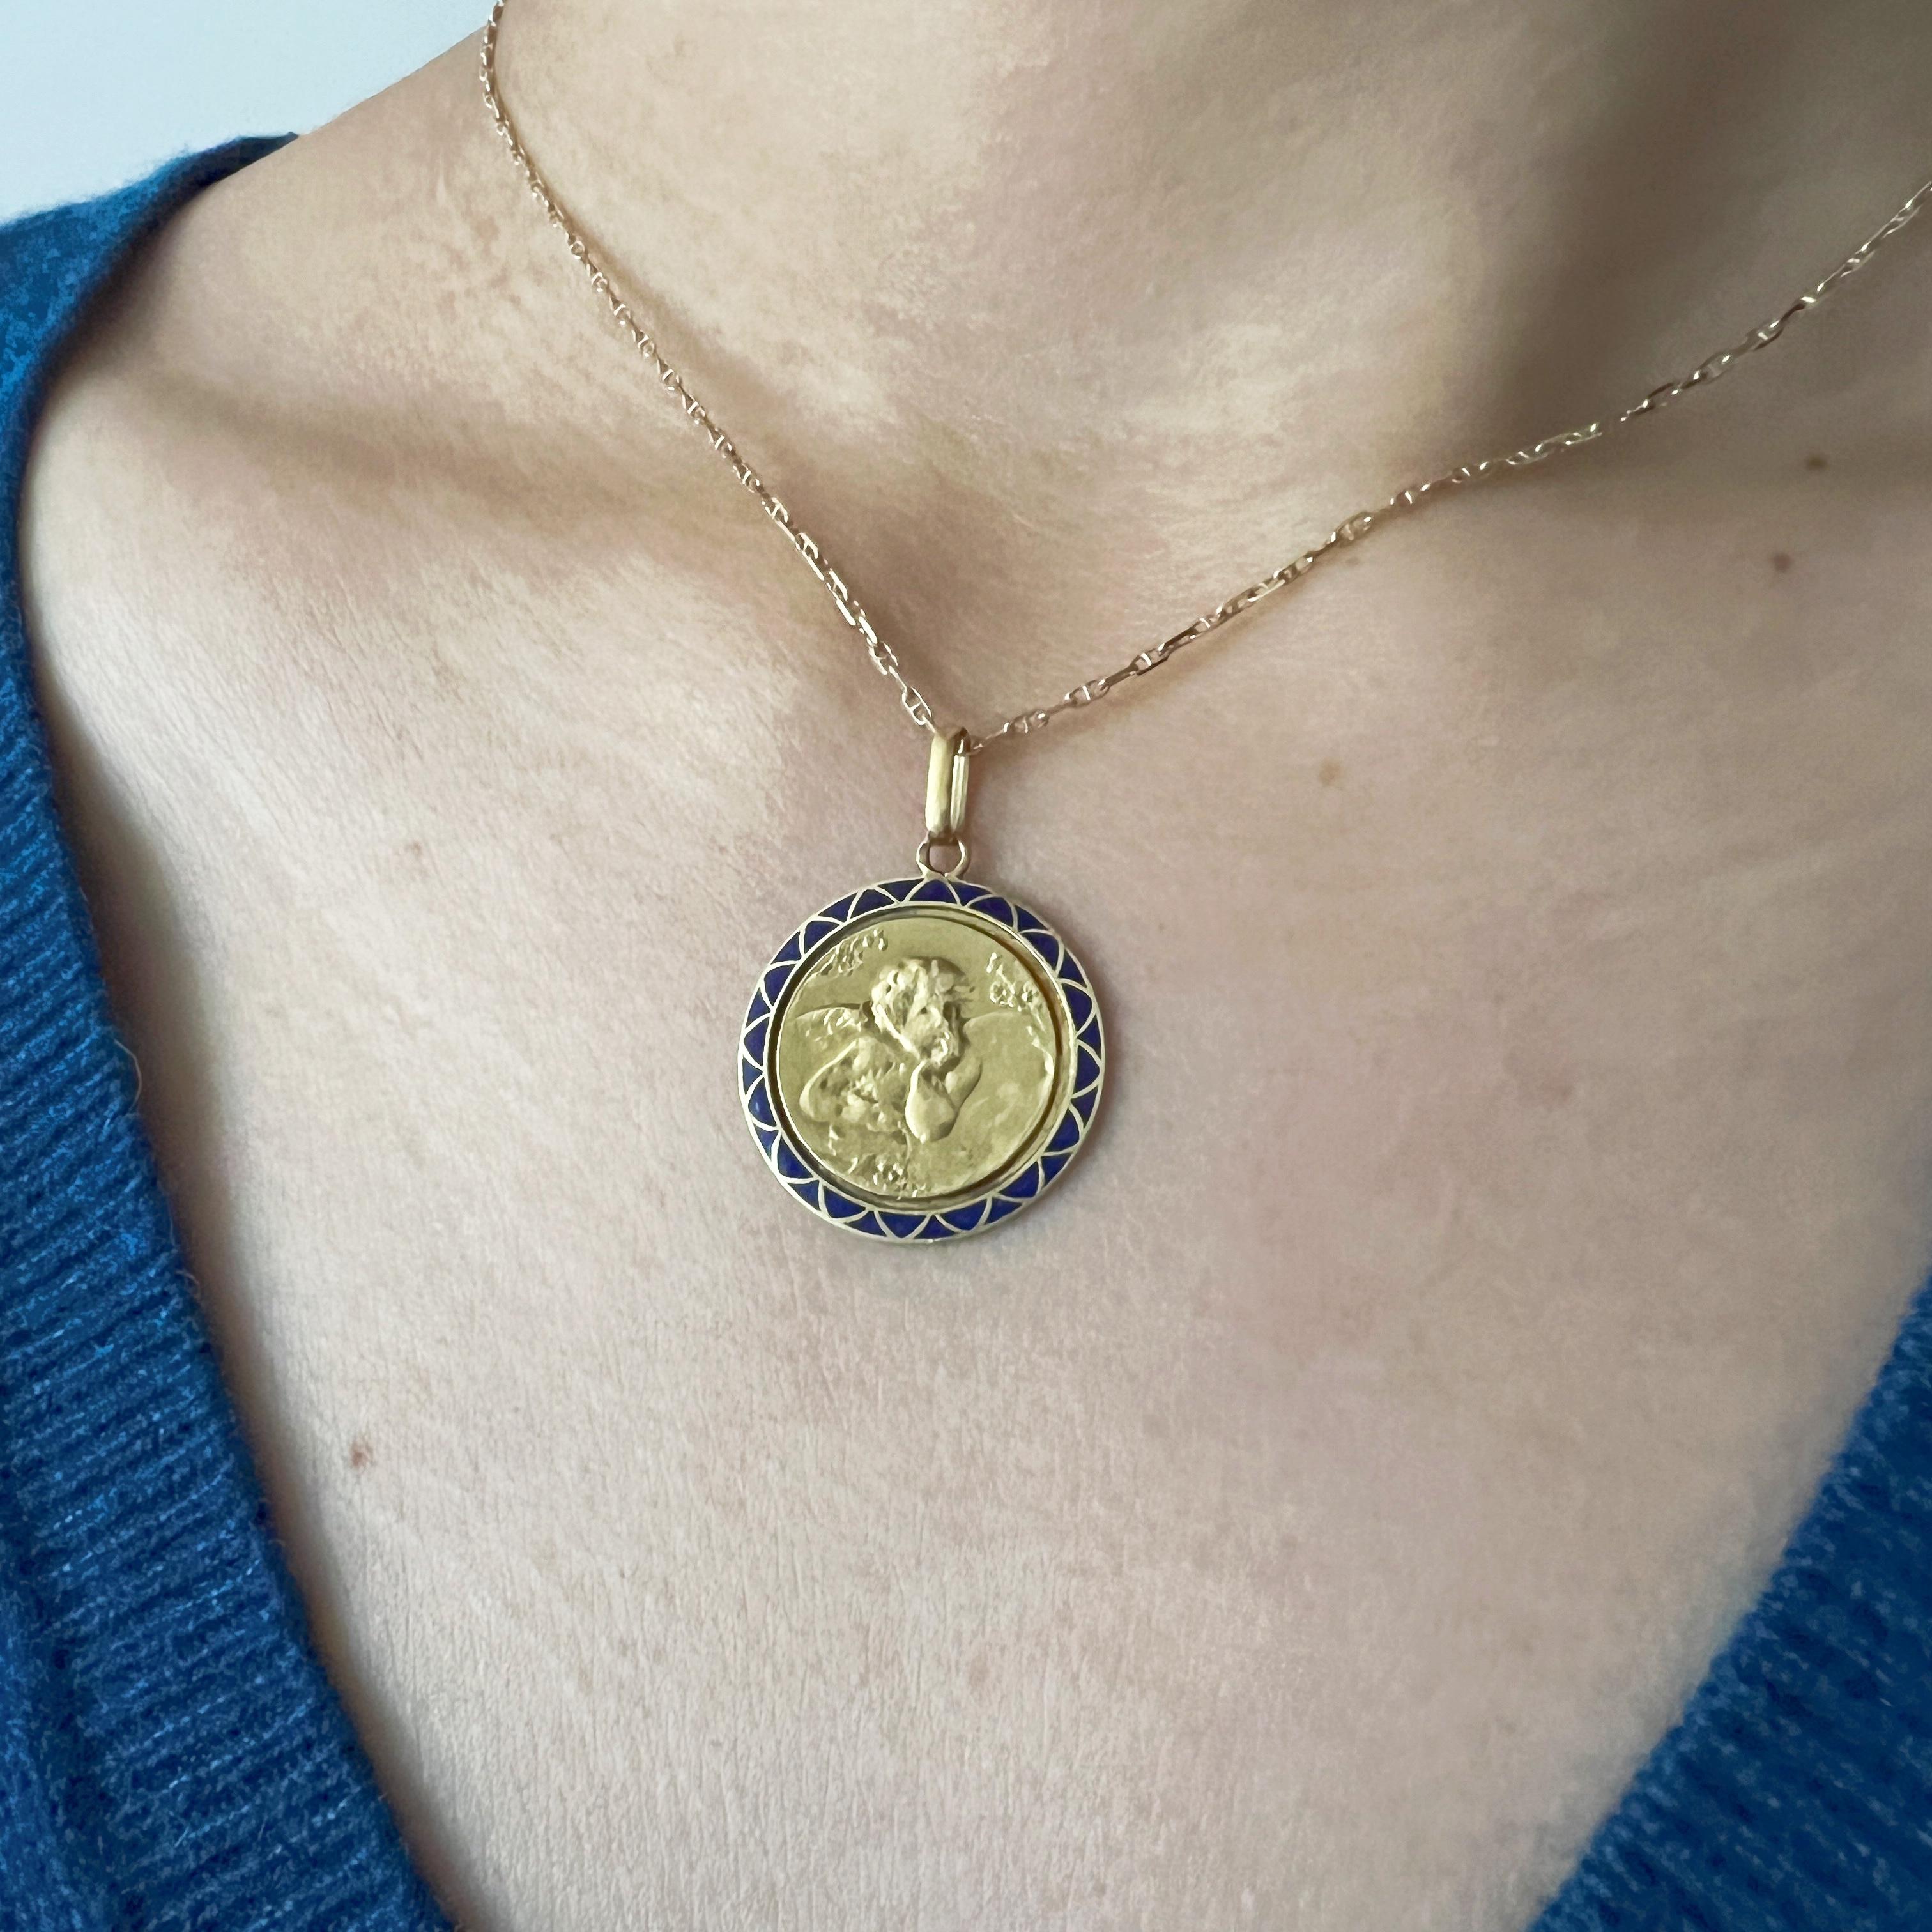 Women's or Men's Antique 18K gold blue enamel angel pendant